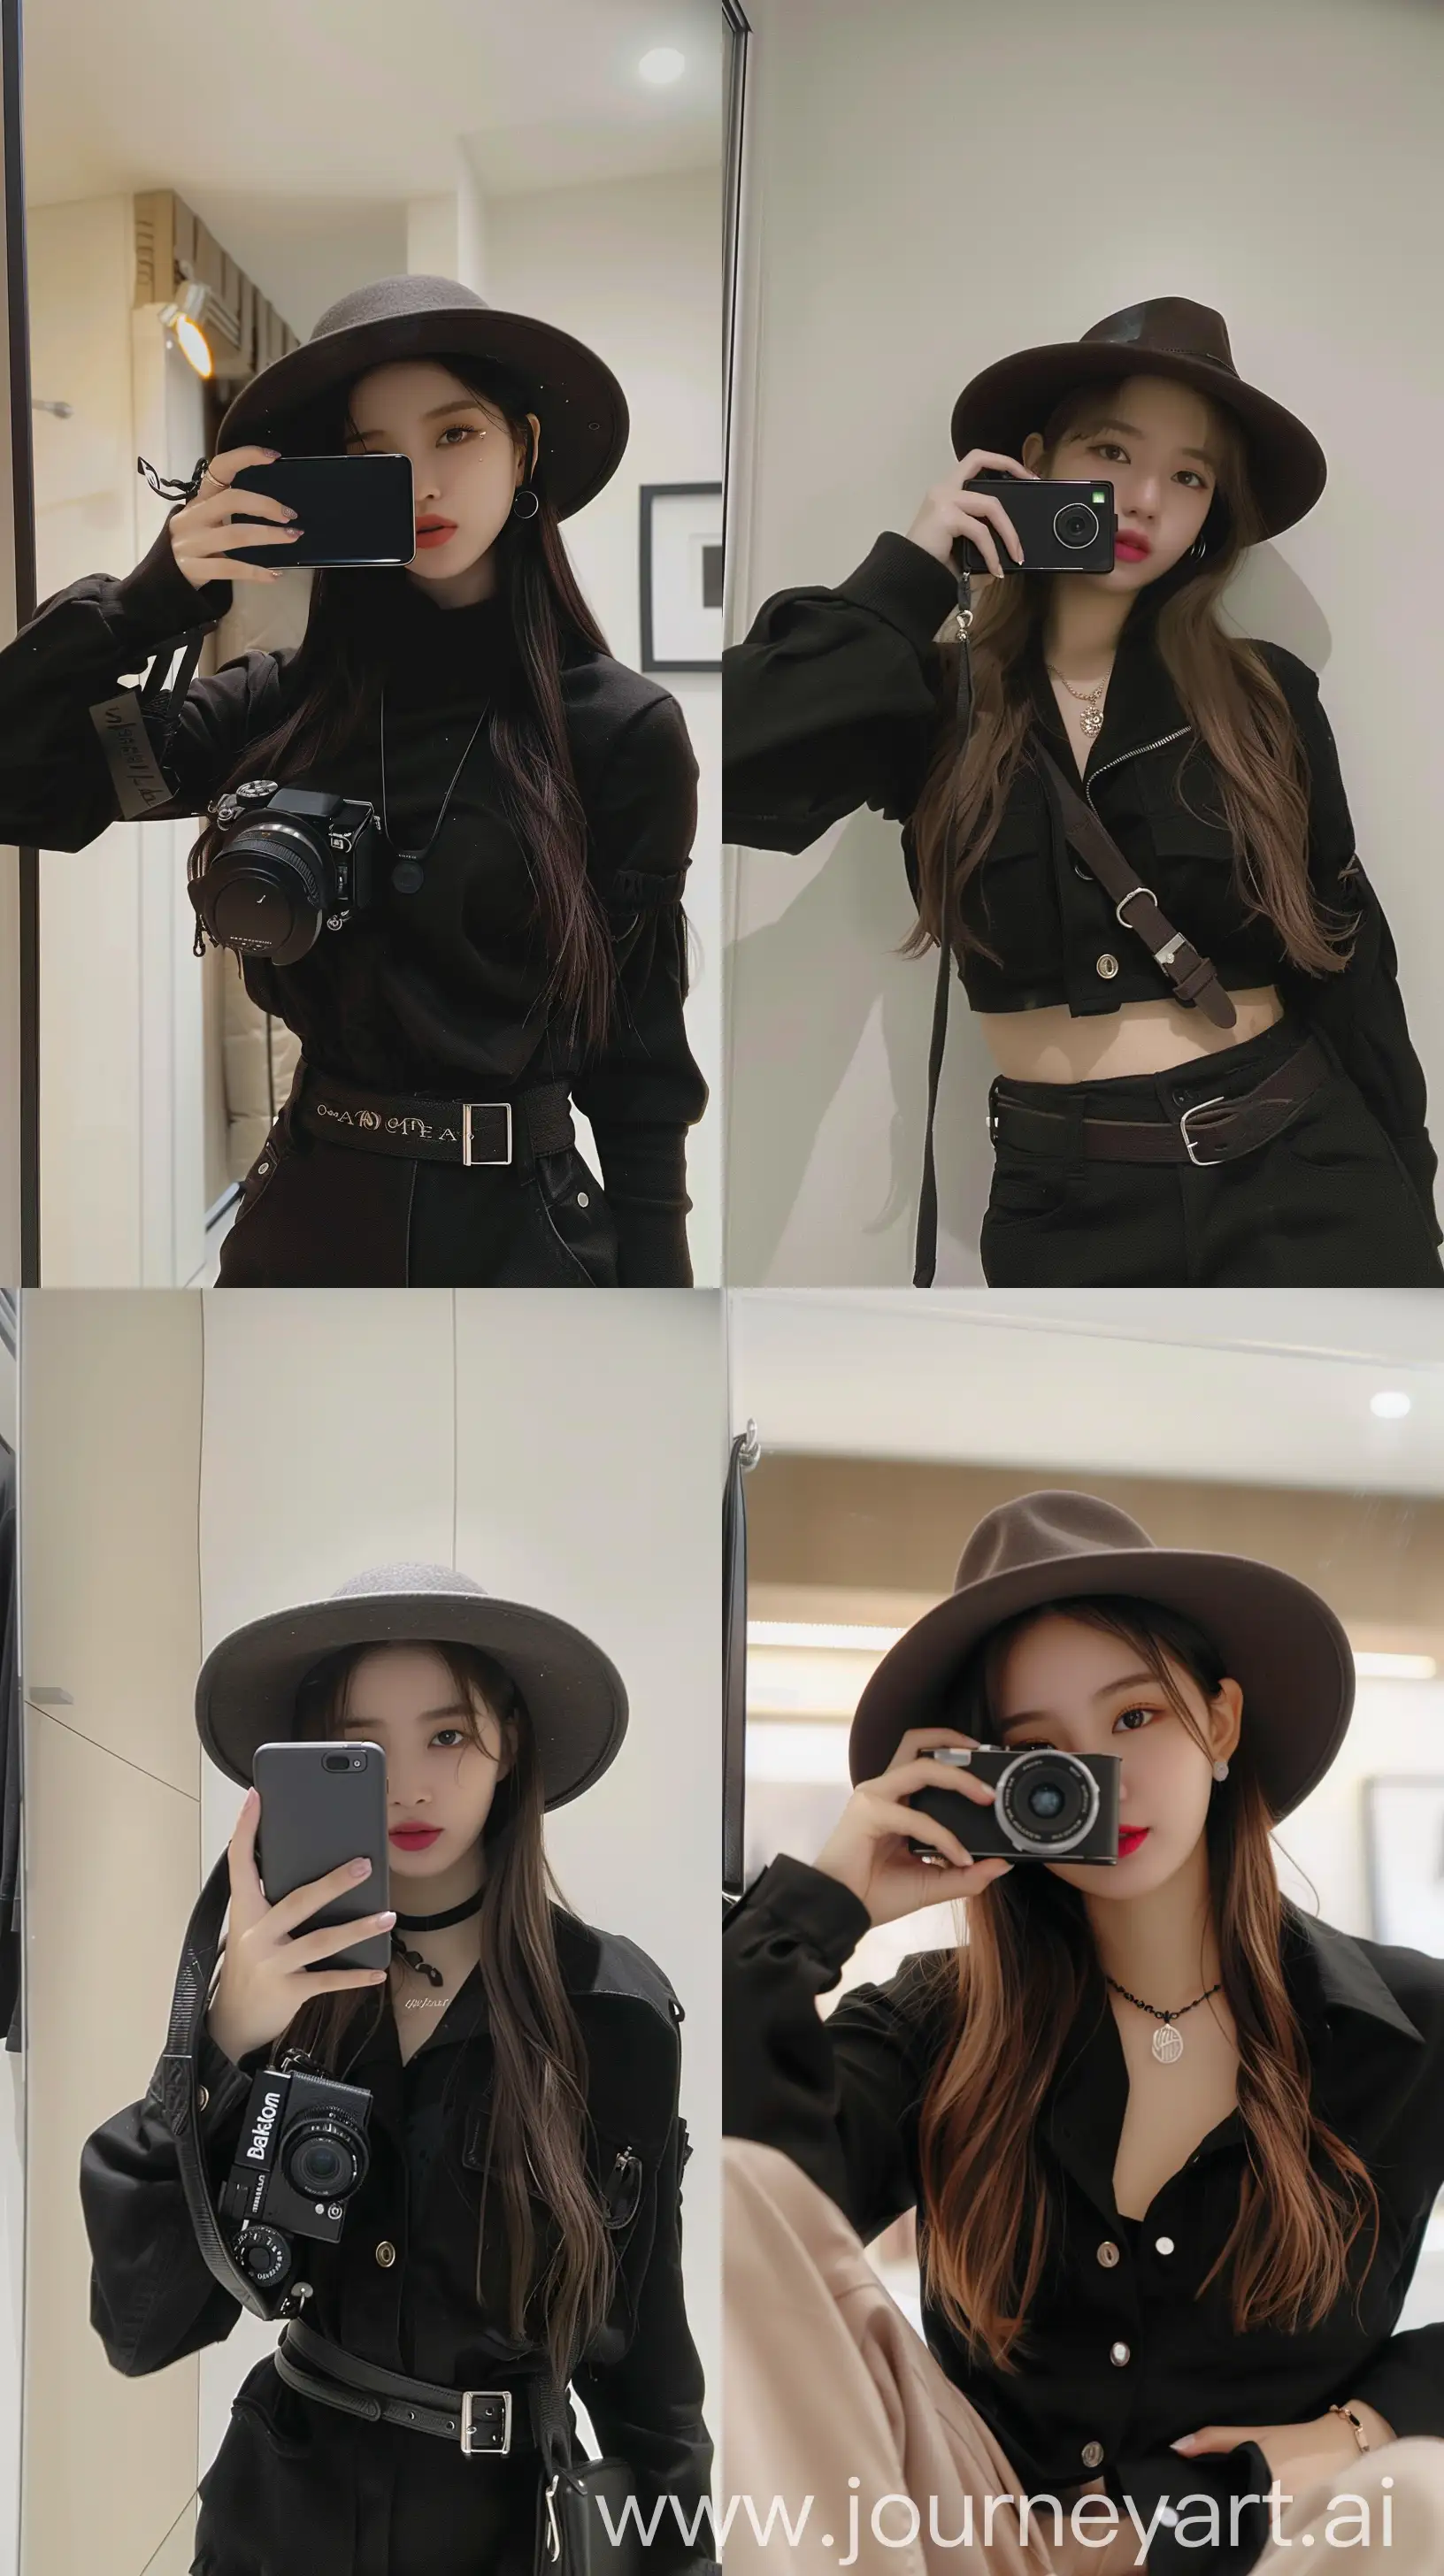 Blackpinks-Jennie-Aesthetic-Mirror-Selfie-in-Cute-Black-Clothes